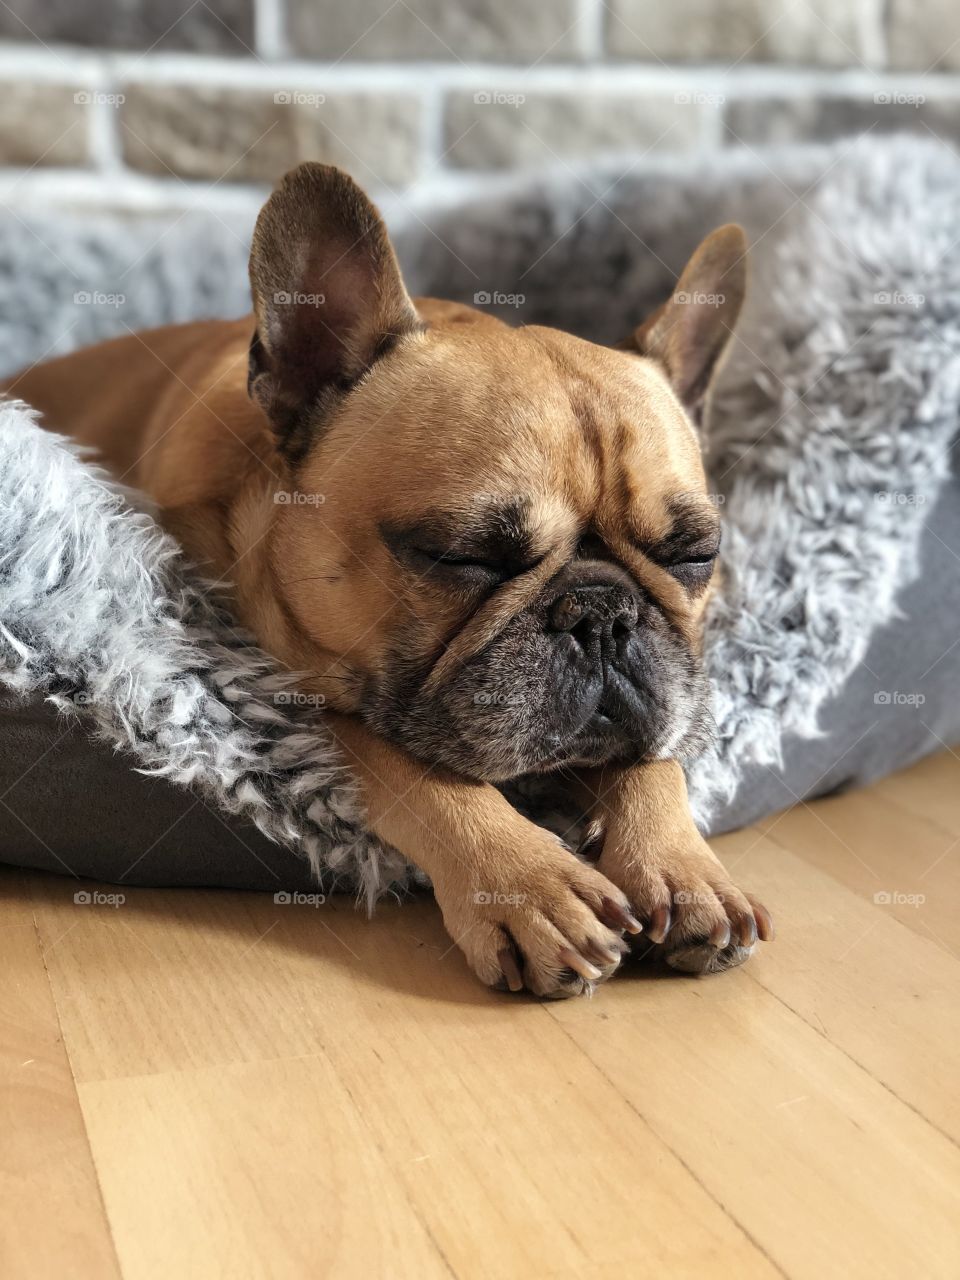 Sweet France bulldog sleeps and dreaming 